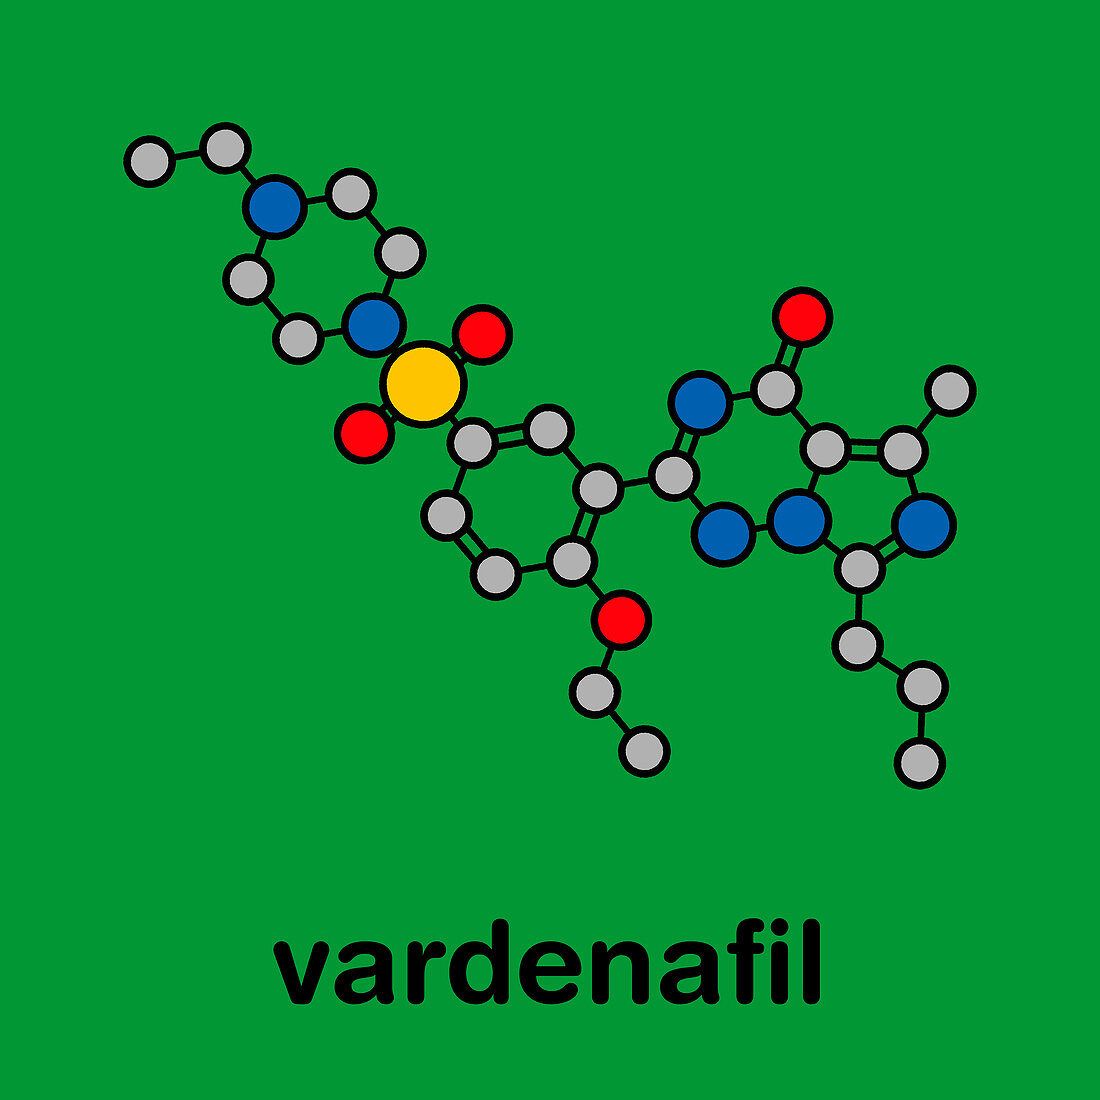 Vardenafil erectile dysfunction drug, molecular model